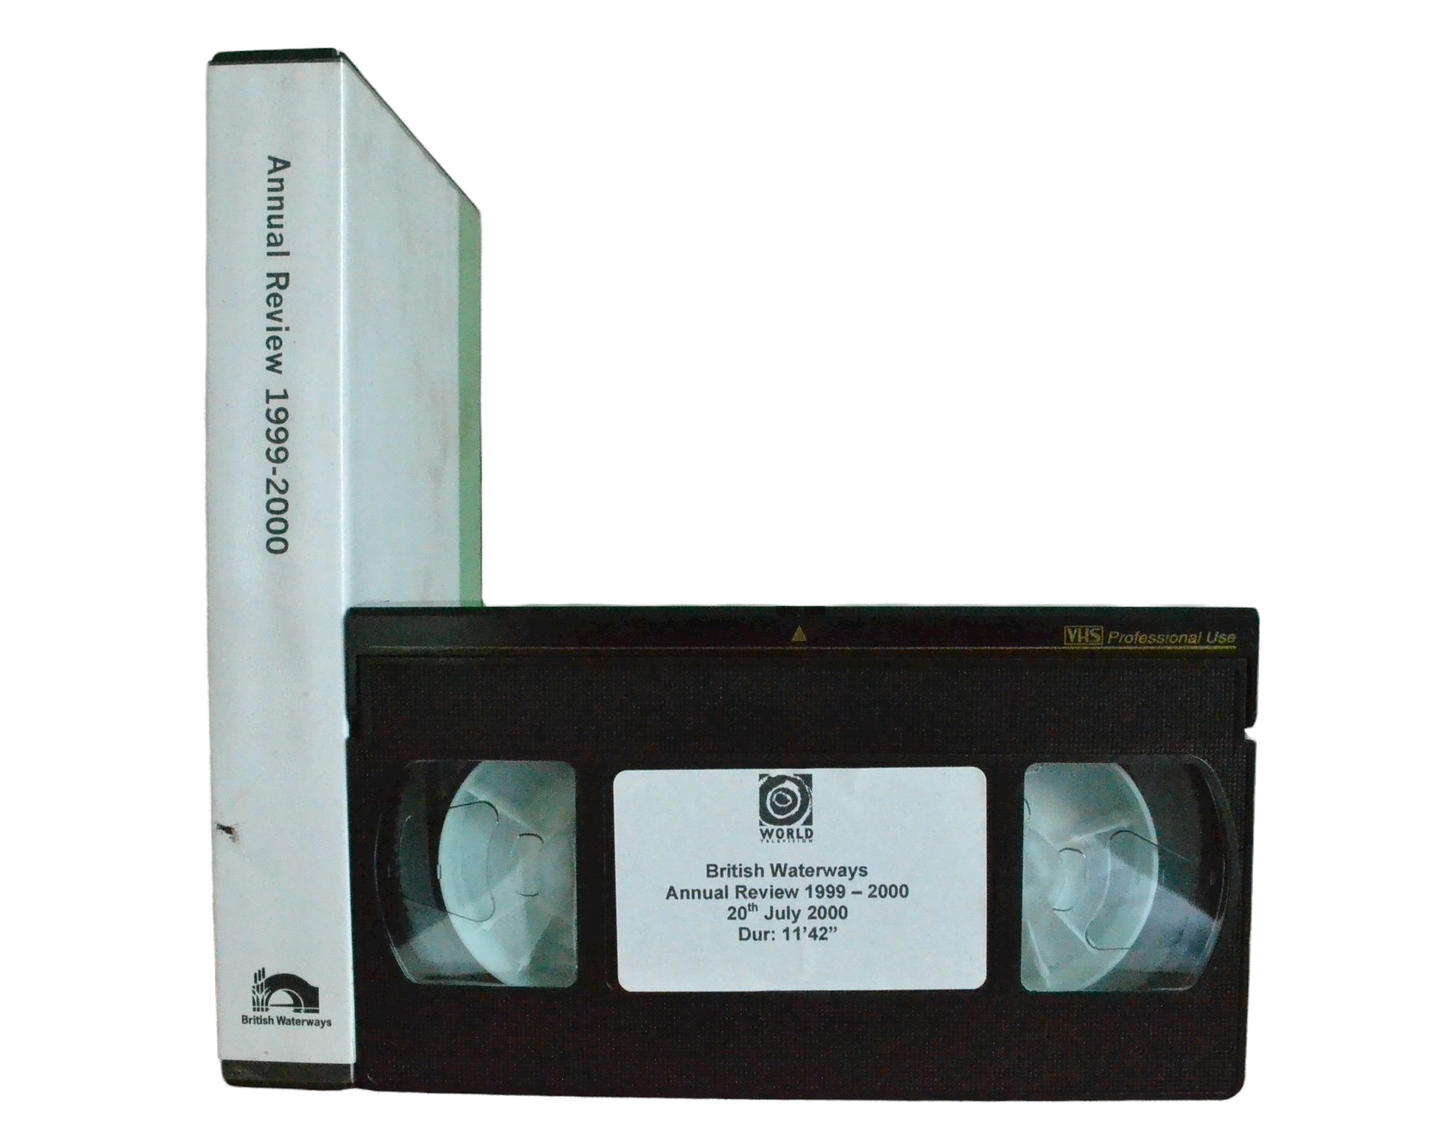 British Waterways : Annual Review 1999-2000 - Willon Grange - World Television - Vintage - Pal VHS-